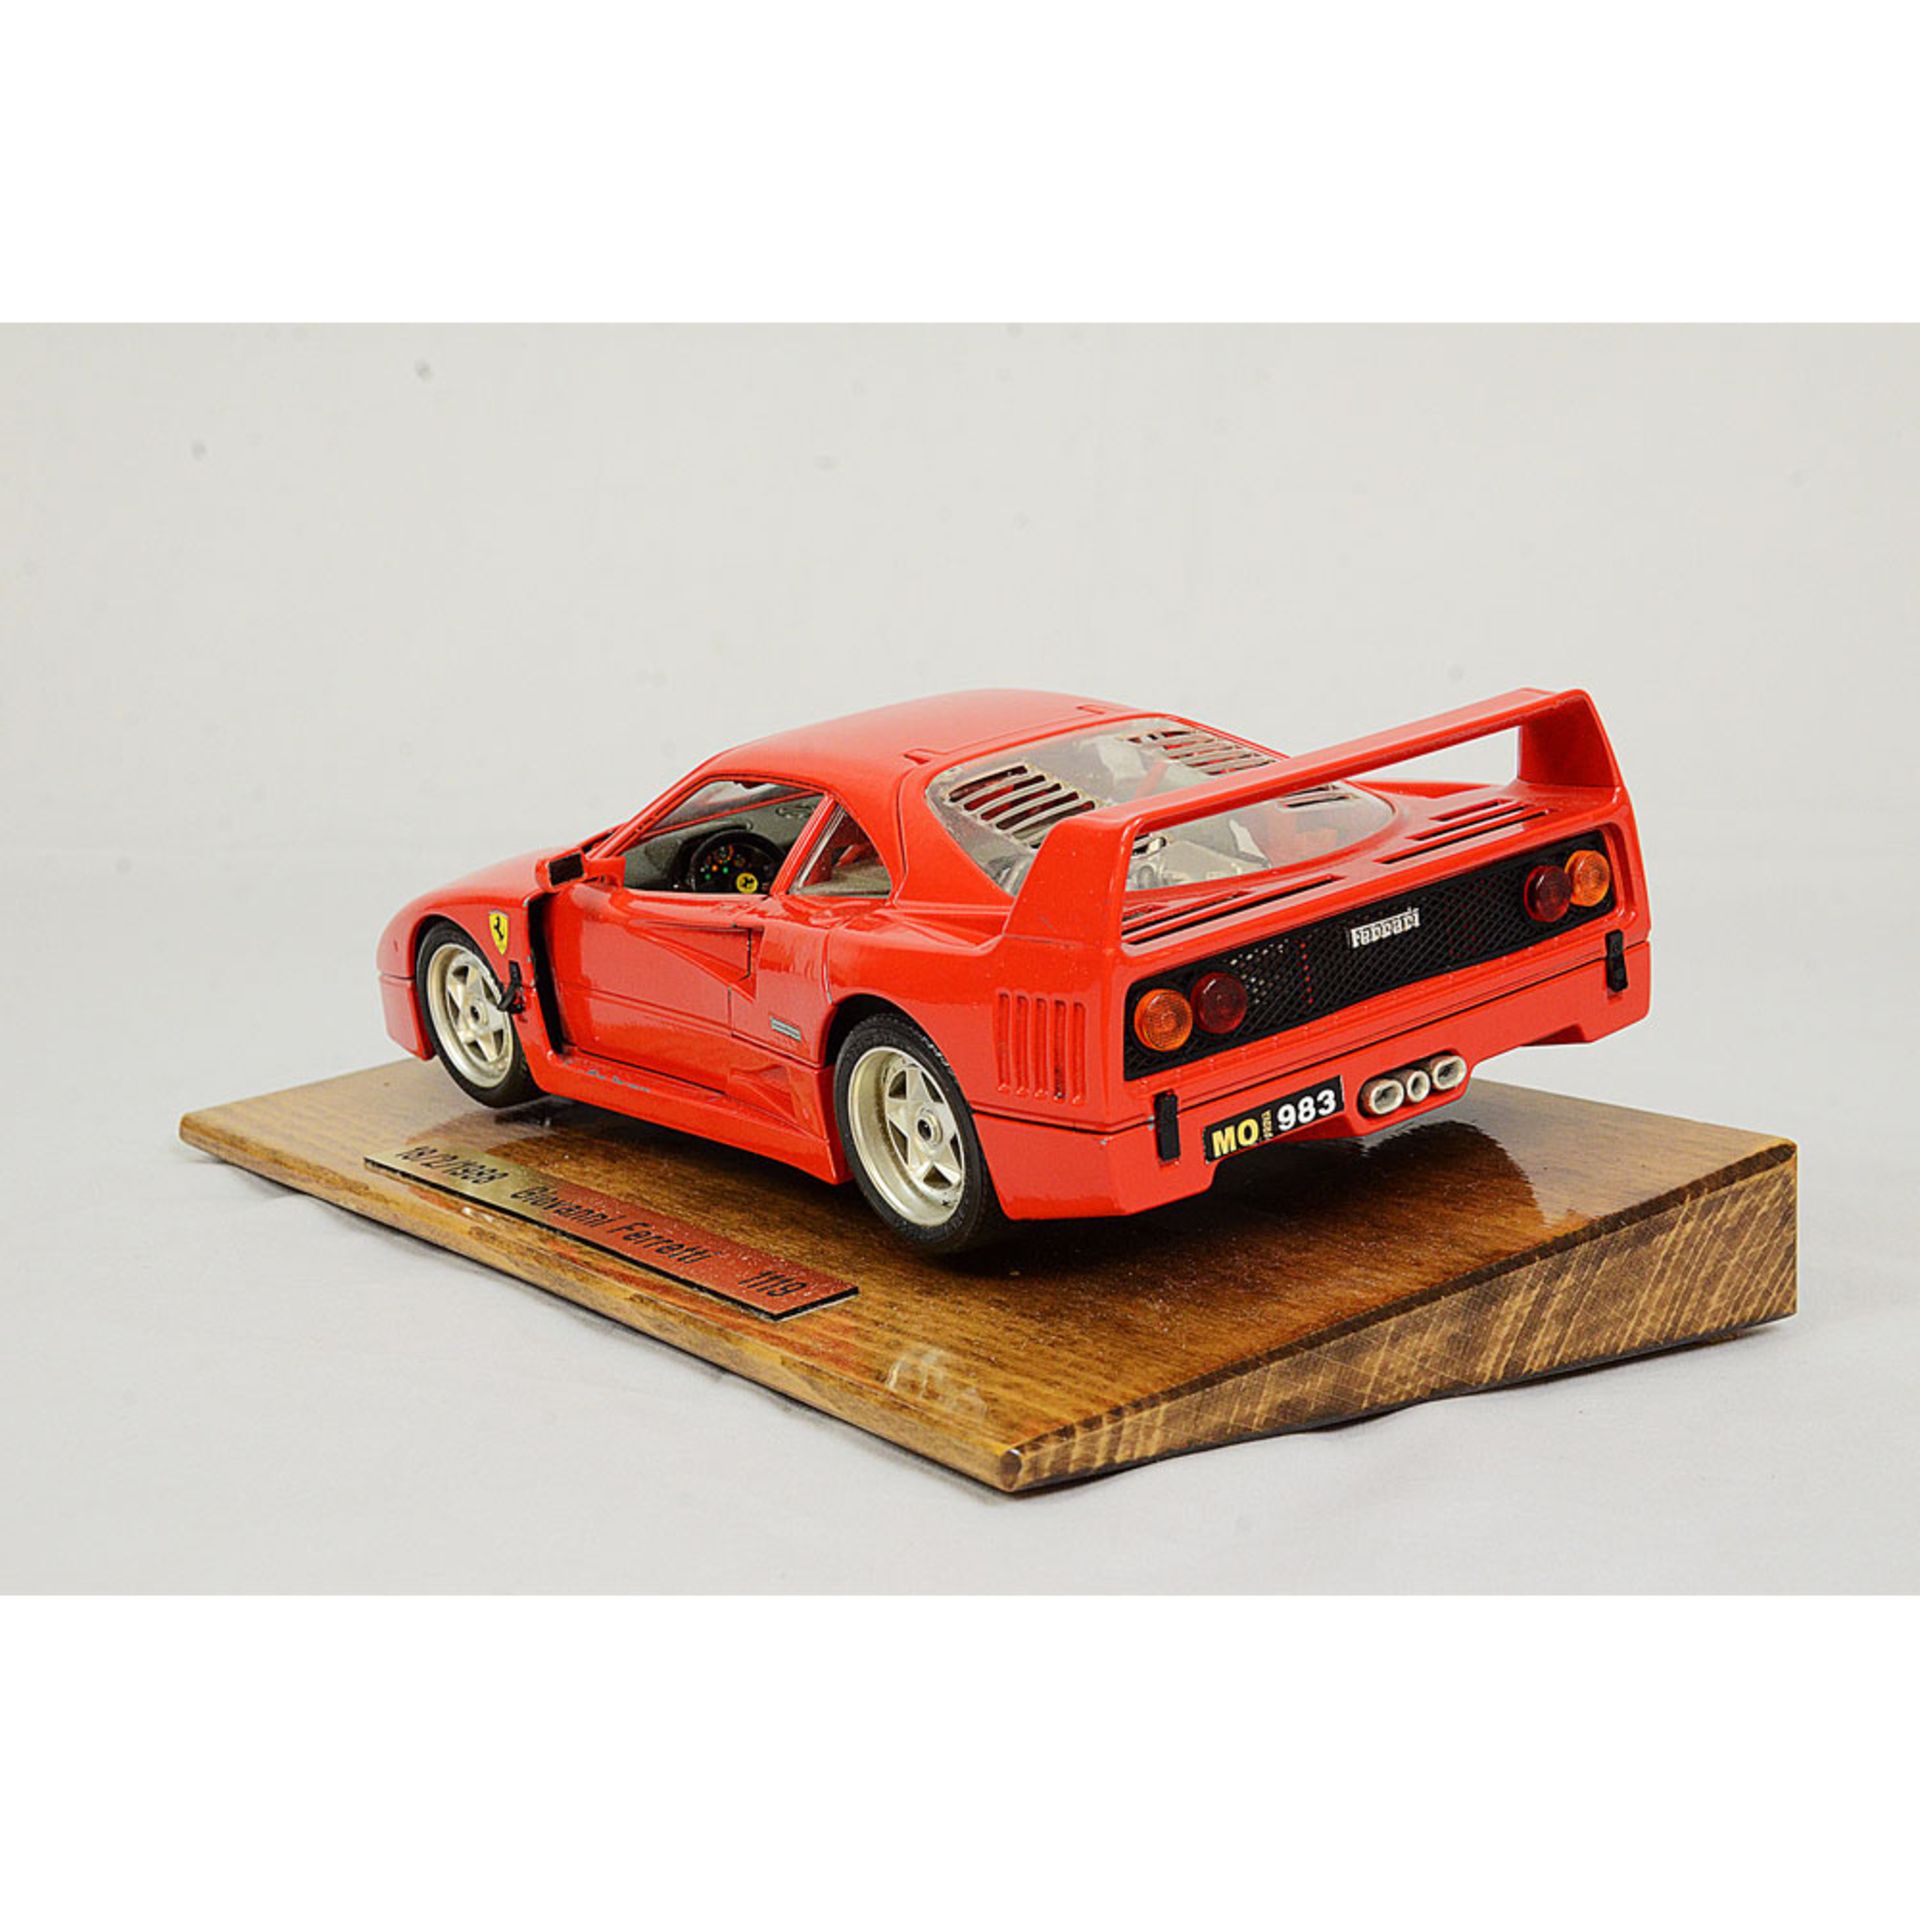 Burago Ferrari F40 1:18 scale model car - Image 10 of 10